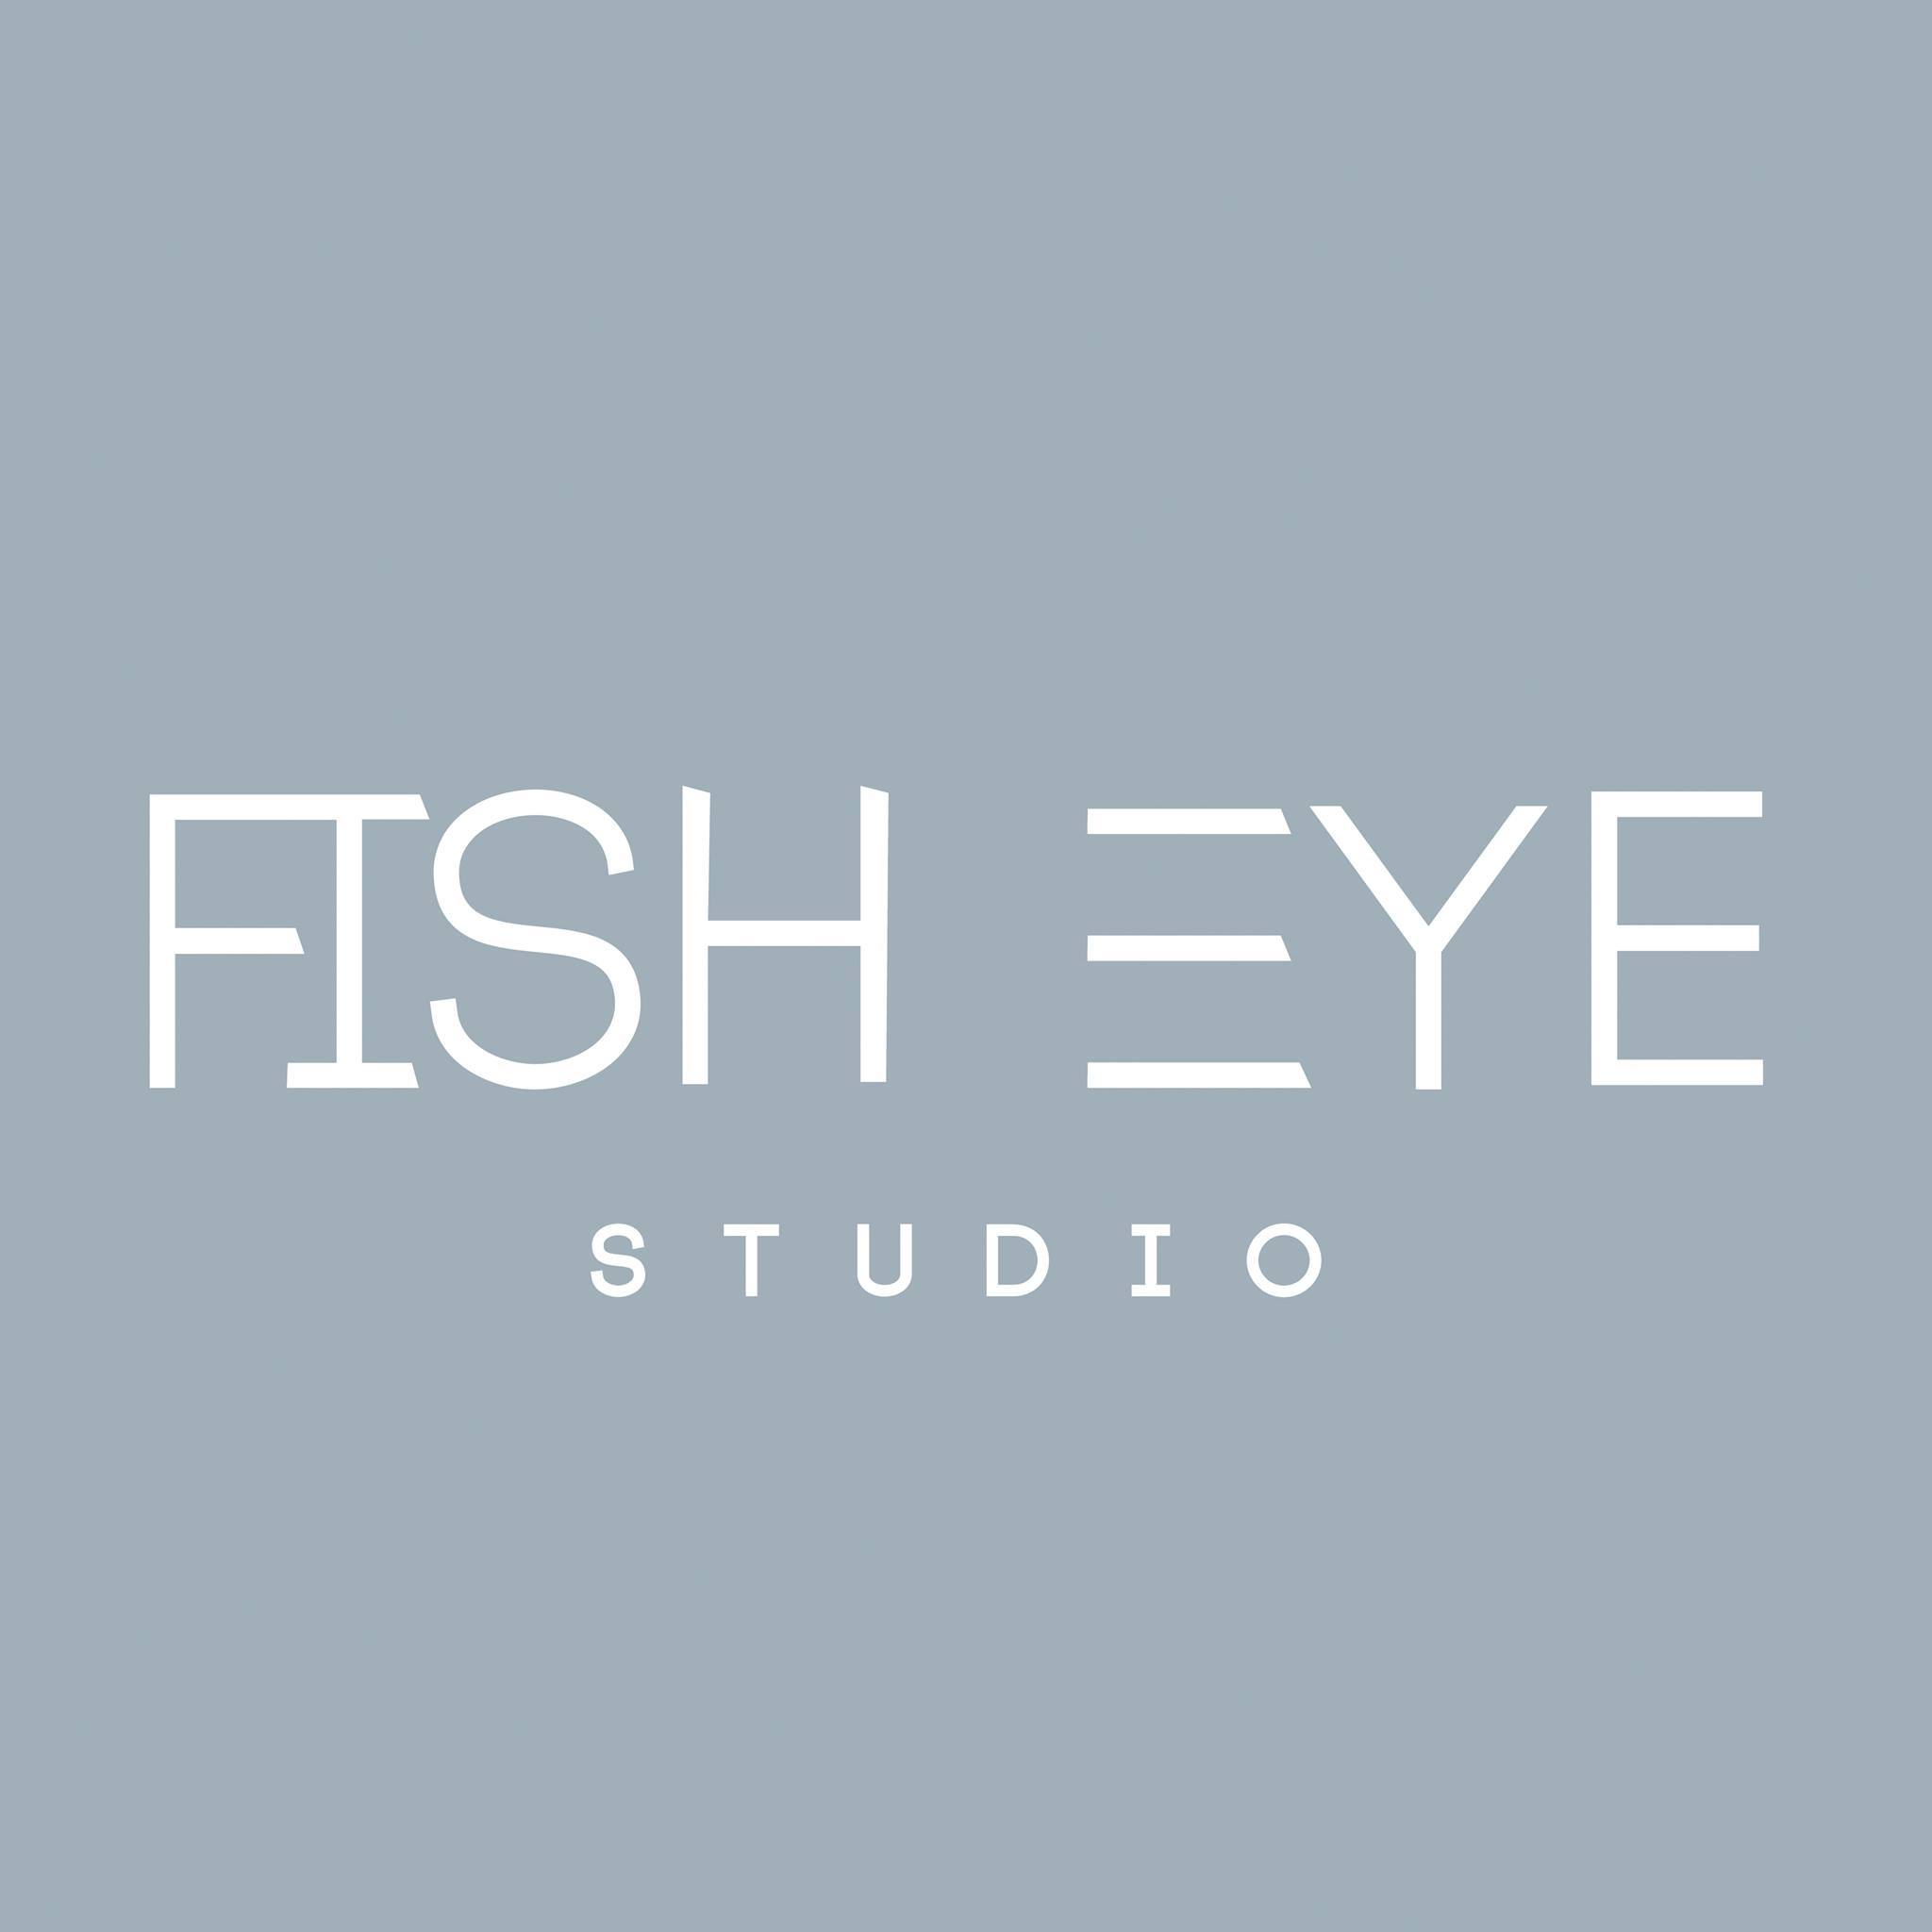 魚小魚攝影工作室 fisheye studio | 自助婚紗攝影師 - 台中攝影工作室